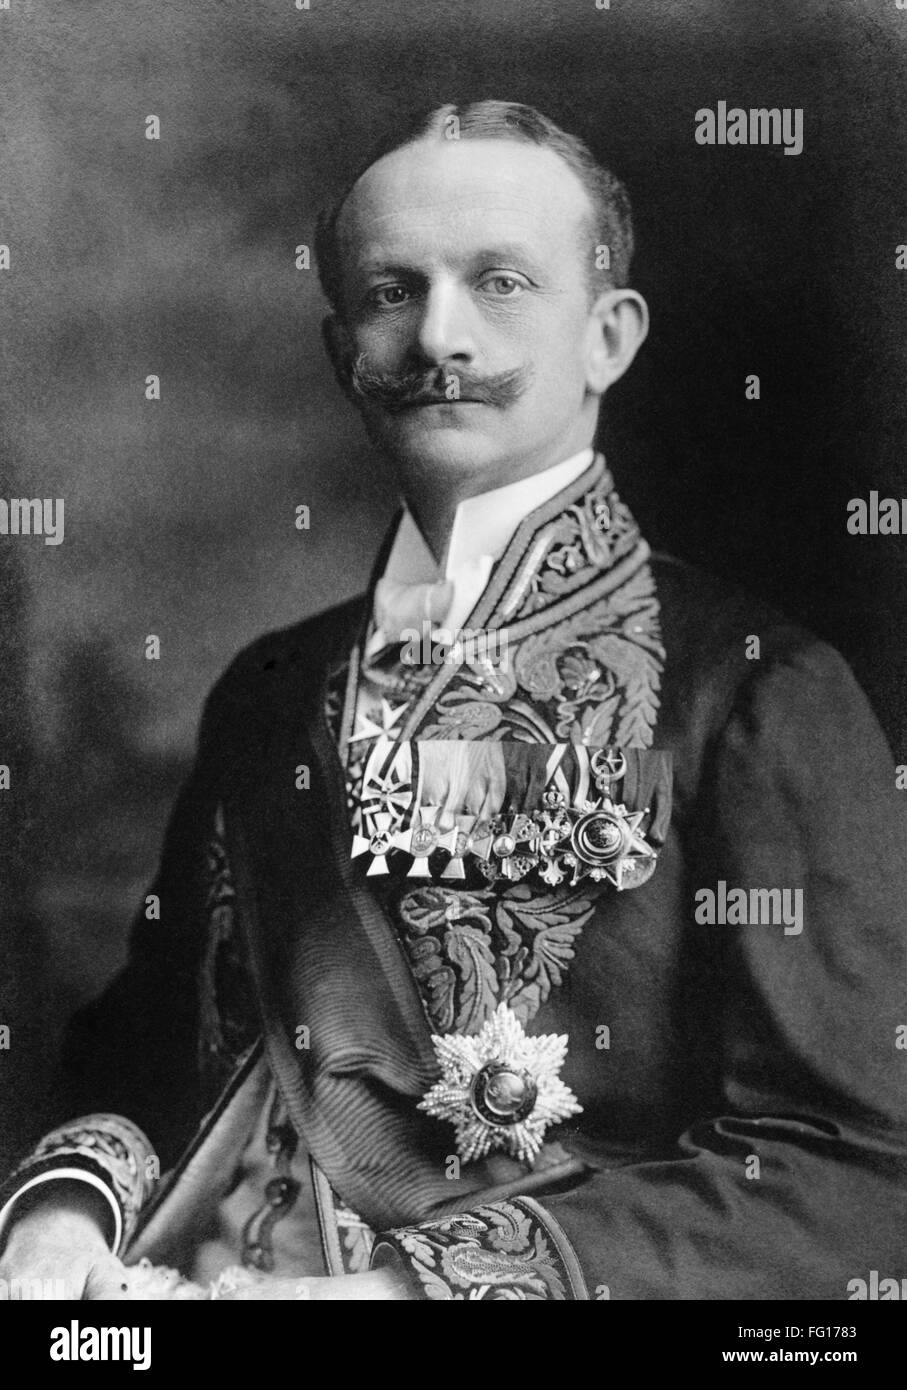 JOHANN VON BERNSTORFF /n(1862-1939). Full name: Johann Heinrich von Bernstorff. German diplomat and statesman. Photograph, early 20th century. Stock Photo